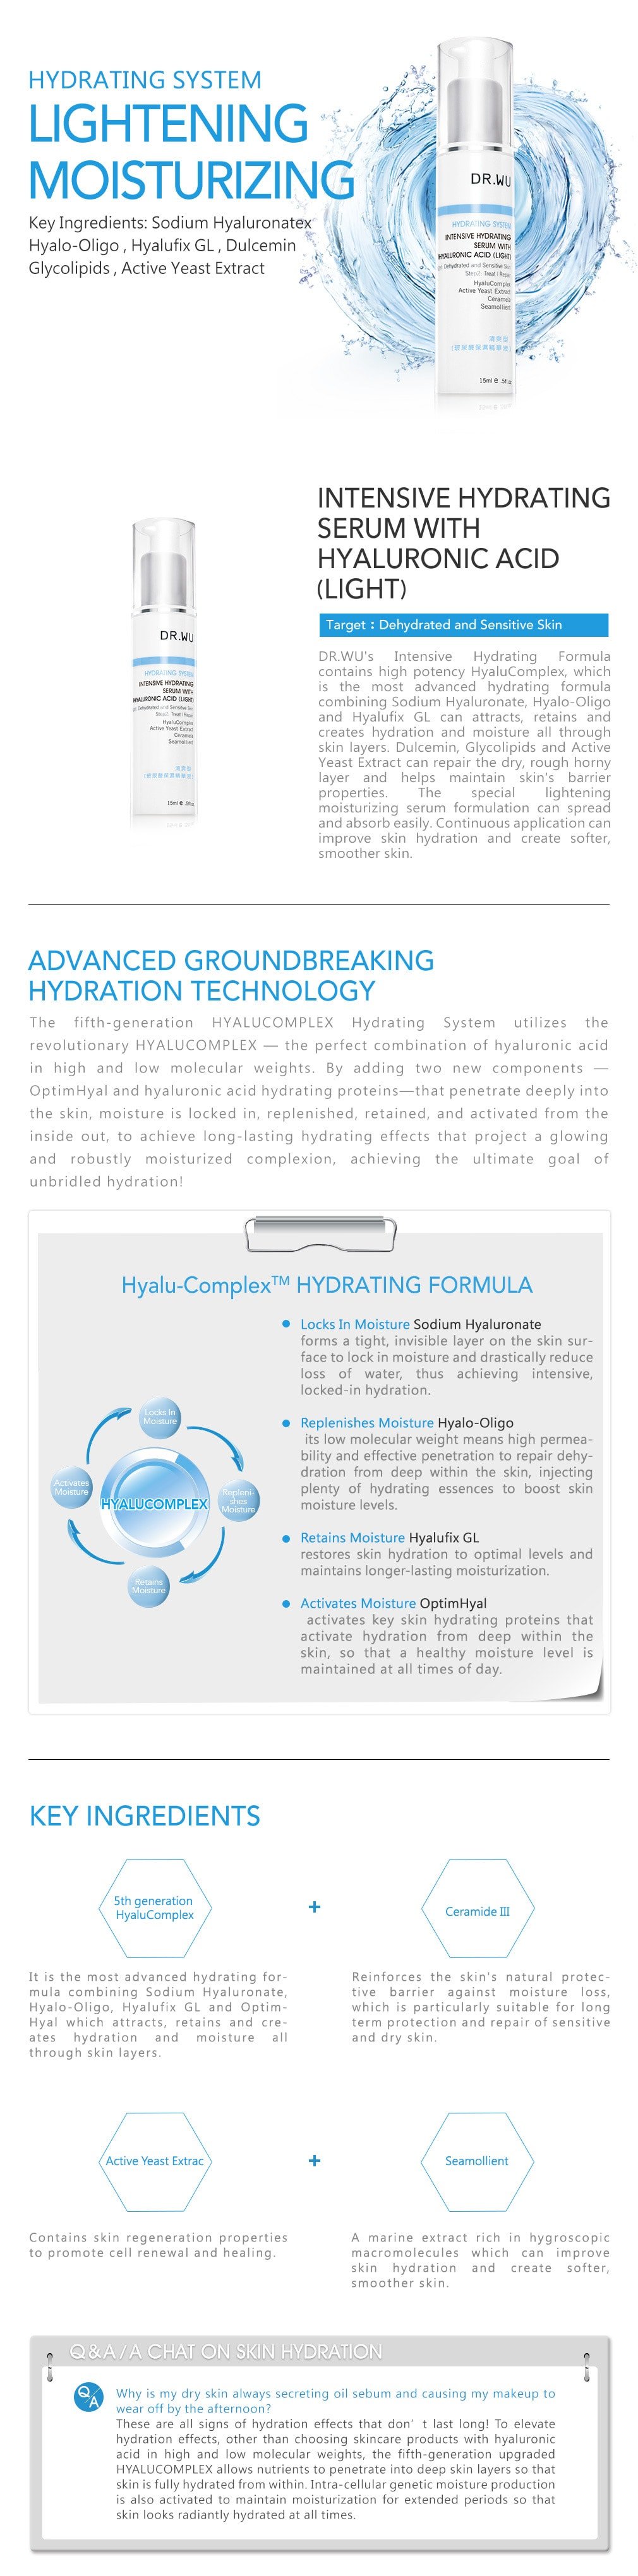 Intensive Hydrating Serum Light - Description